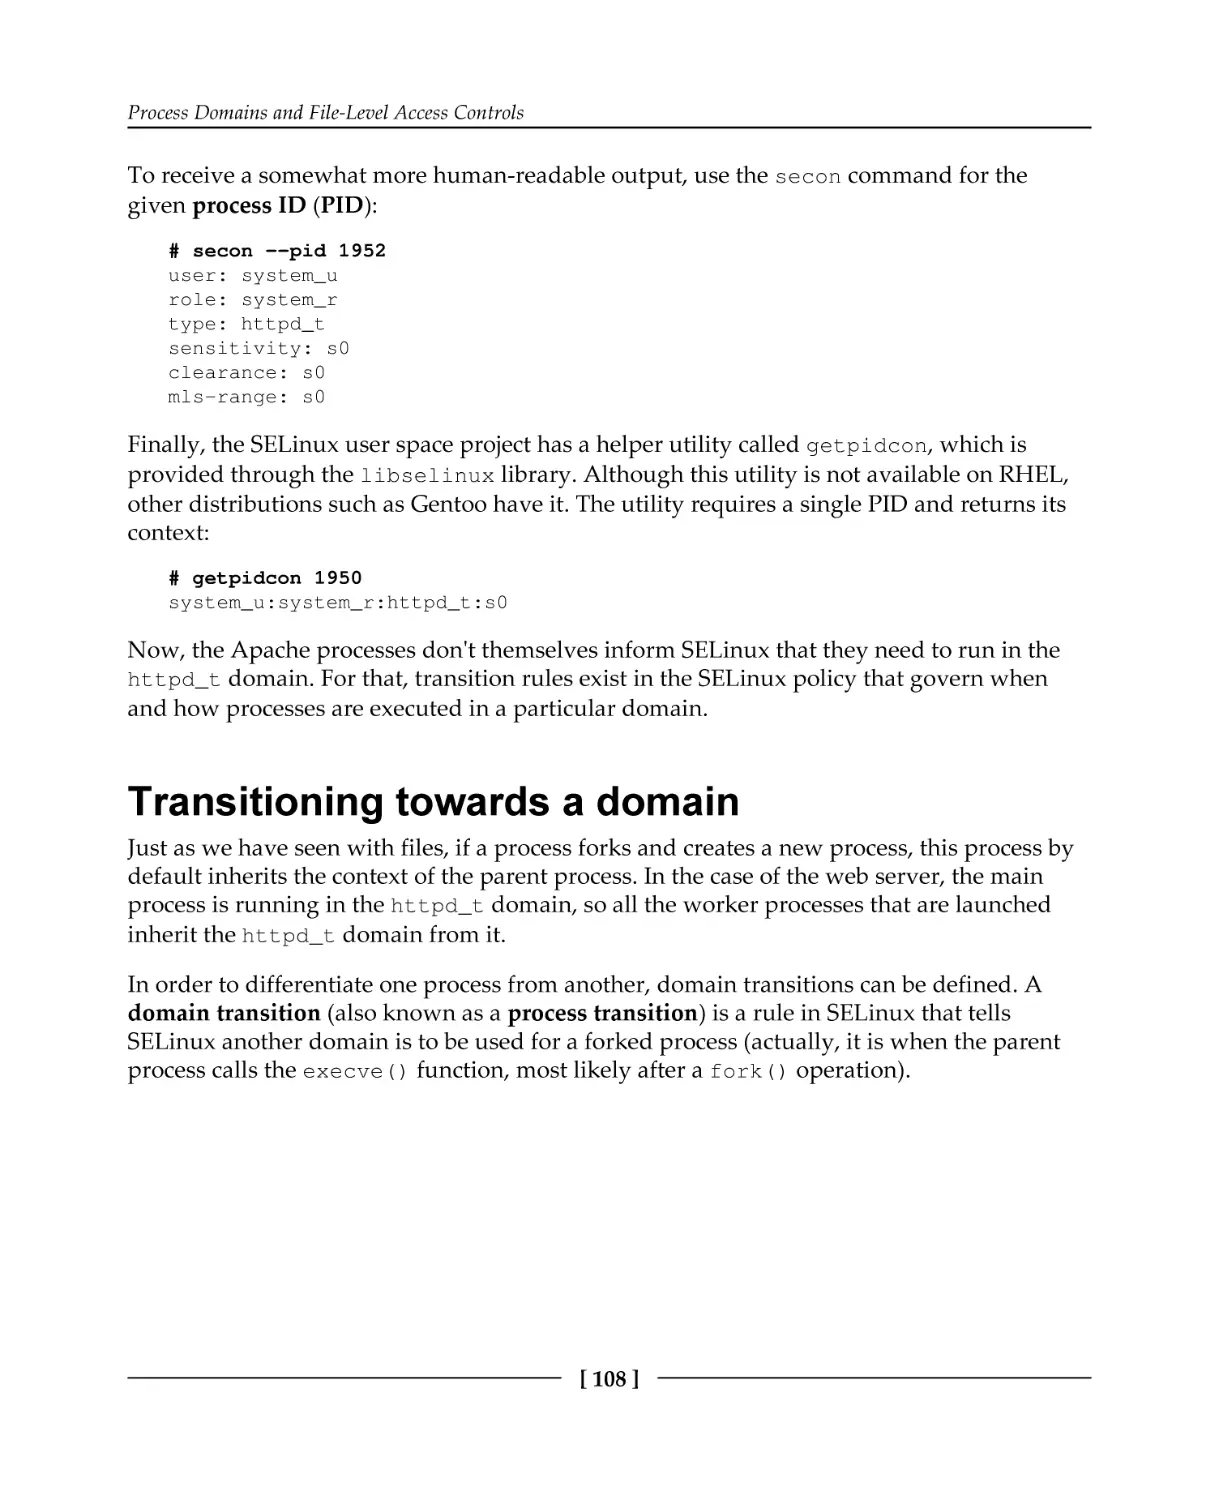 Transitioning towards a domain